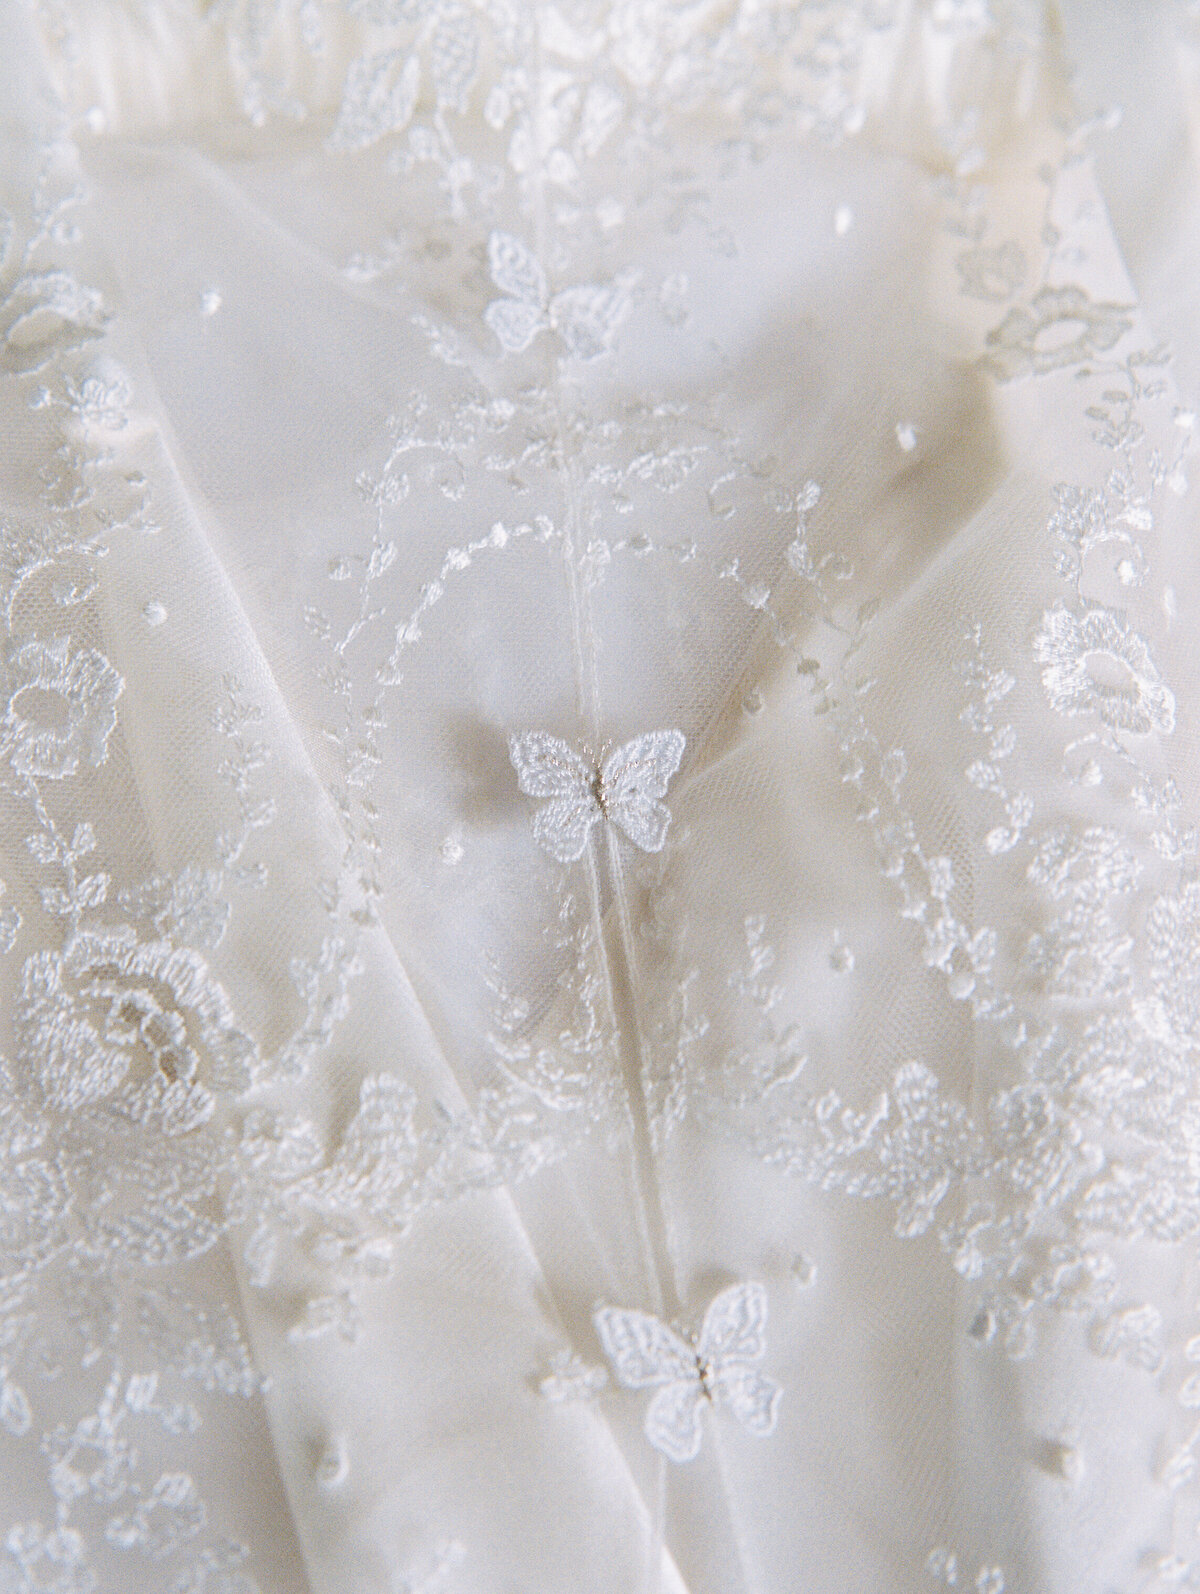 close up of delicate butterfly details on Elizabeth Fillmore dress